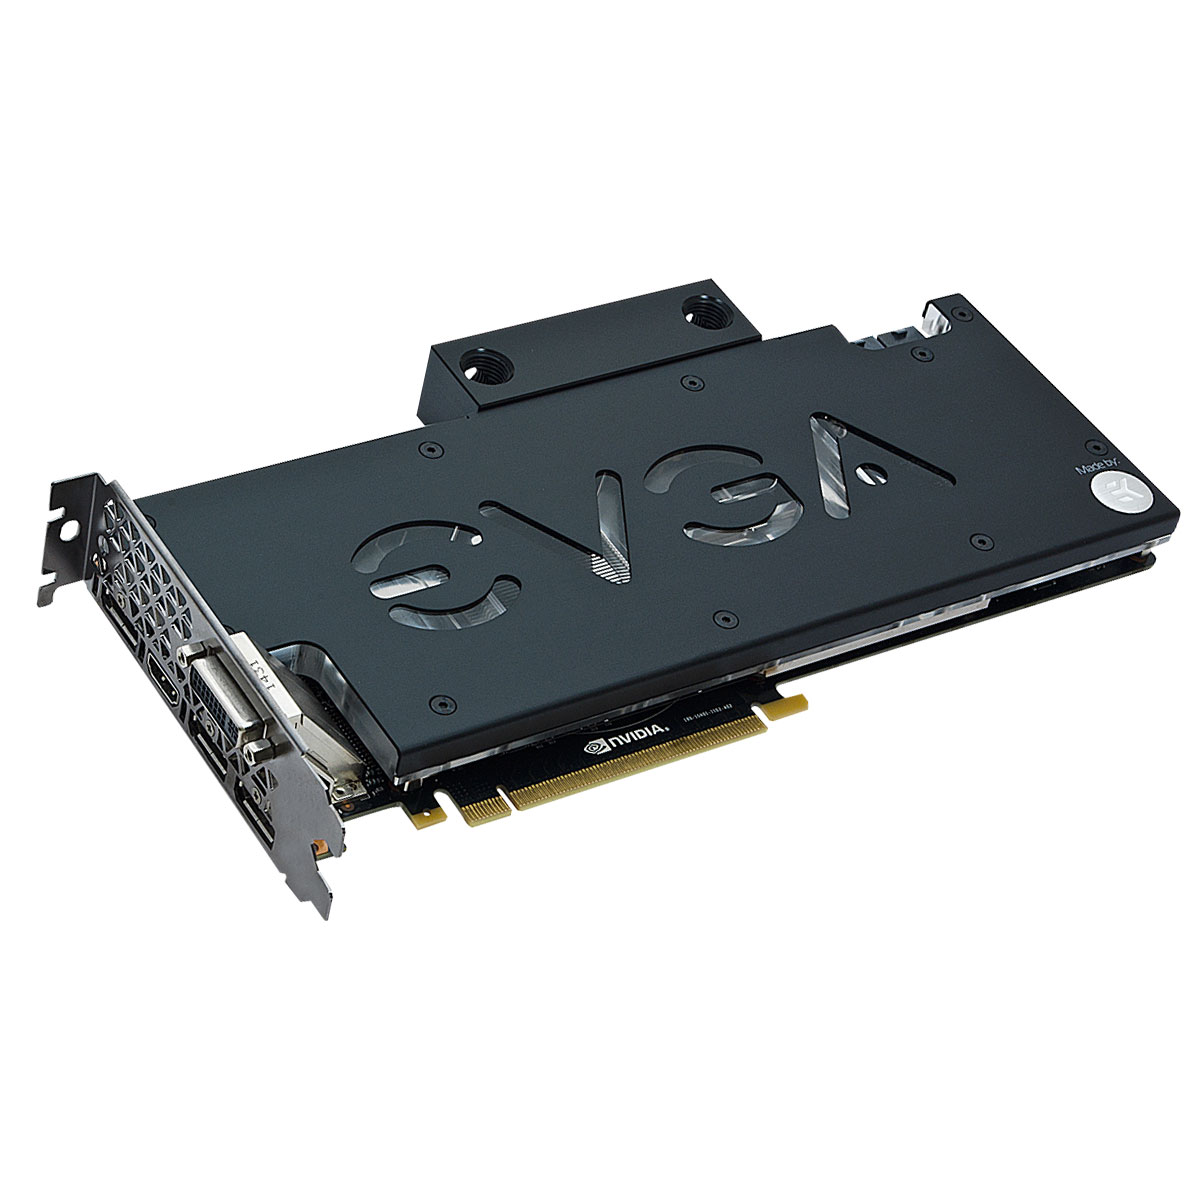 EVGA GeForce GTX 980 και 970 GPUs